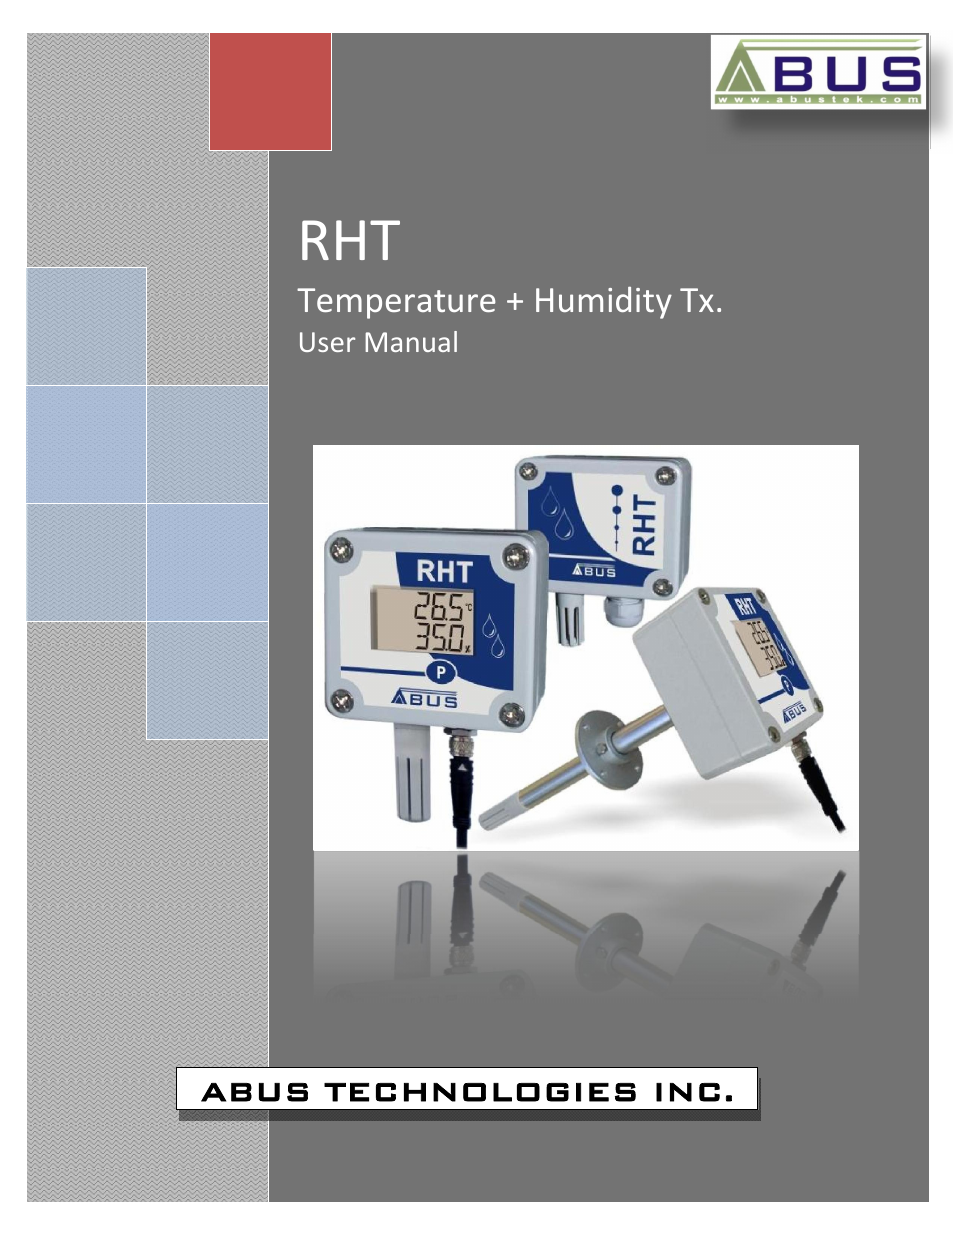 RHT-WM Series Relative Humidity Transmitter